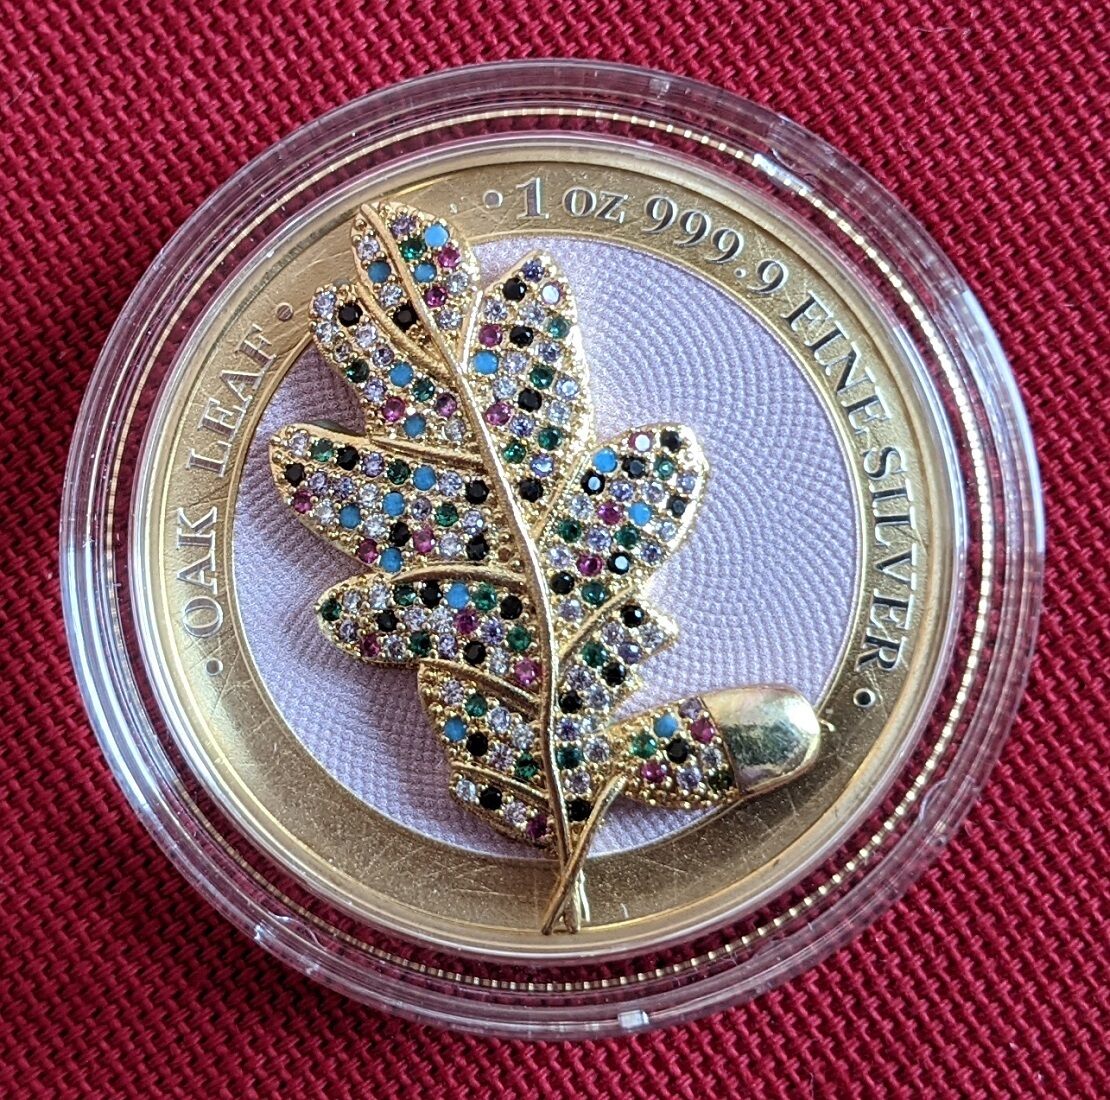 Deutschland 5 Mark - 1 Unze Silber 2019 Germania Mint - Mythical Forest -  Bejeweled Oak Leaf - Eichenblatt BU colorated with capsule, metal box & coa